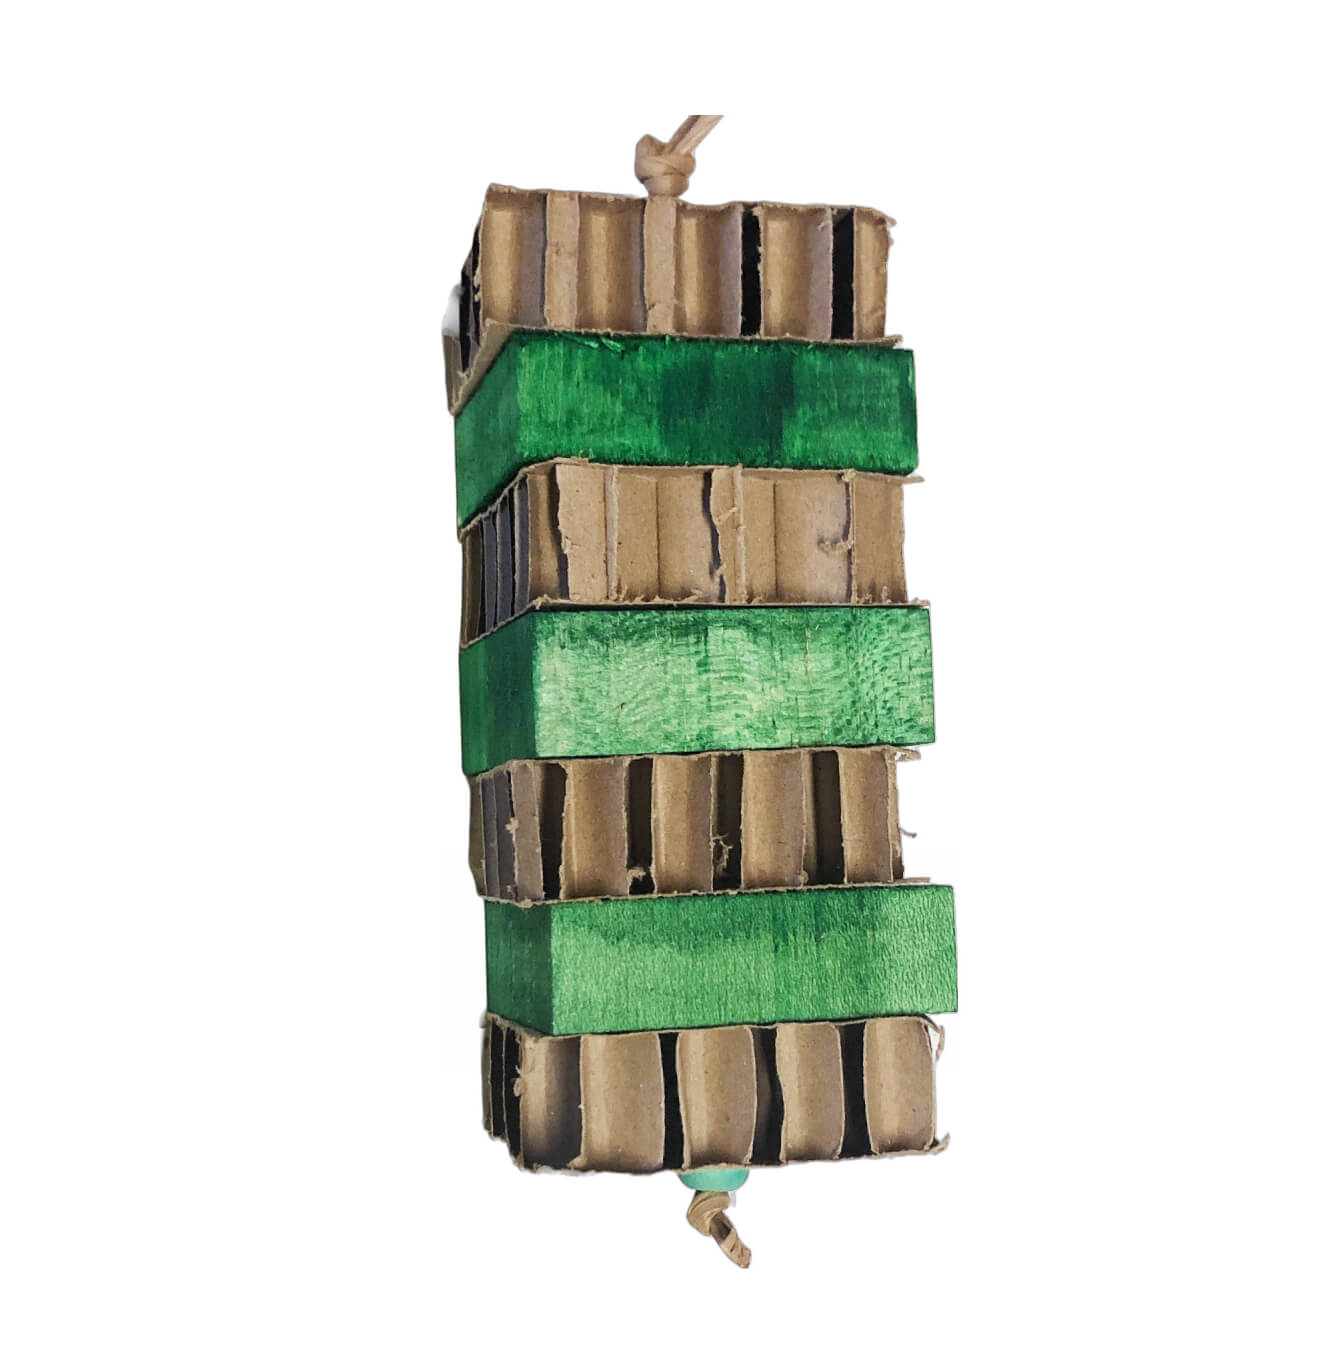 Green balsa blocks with cardboard